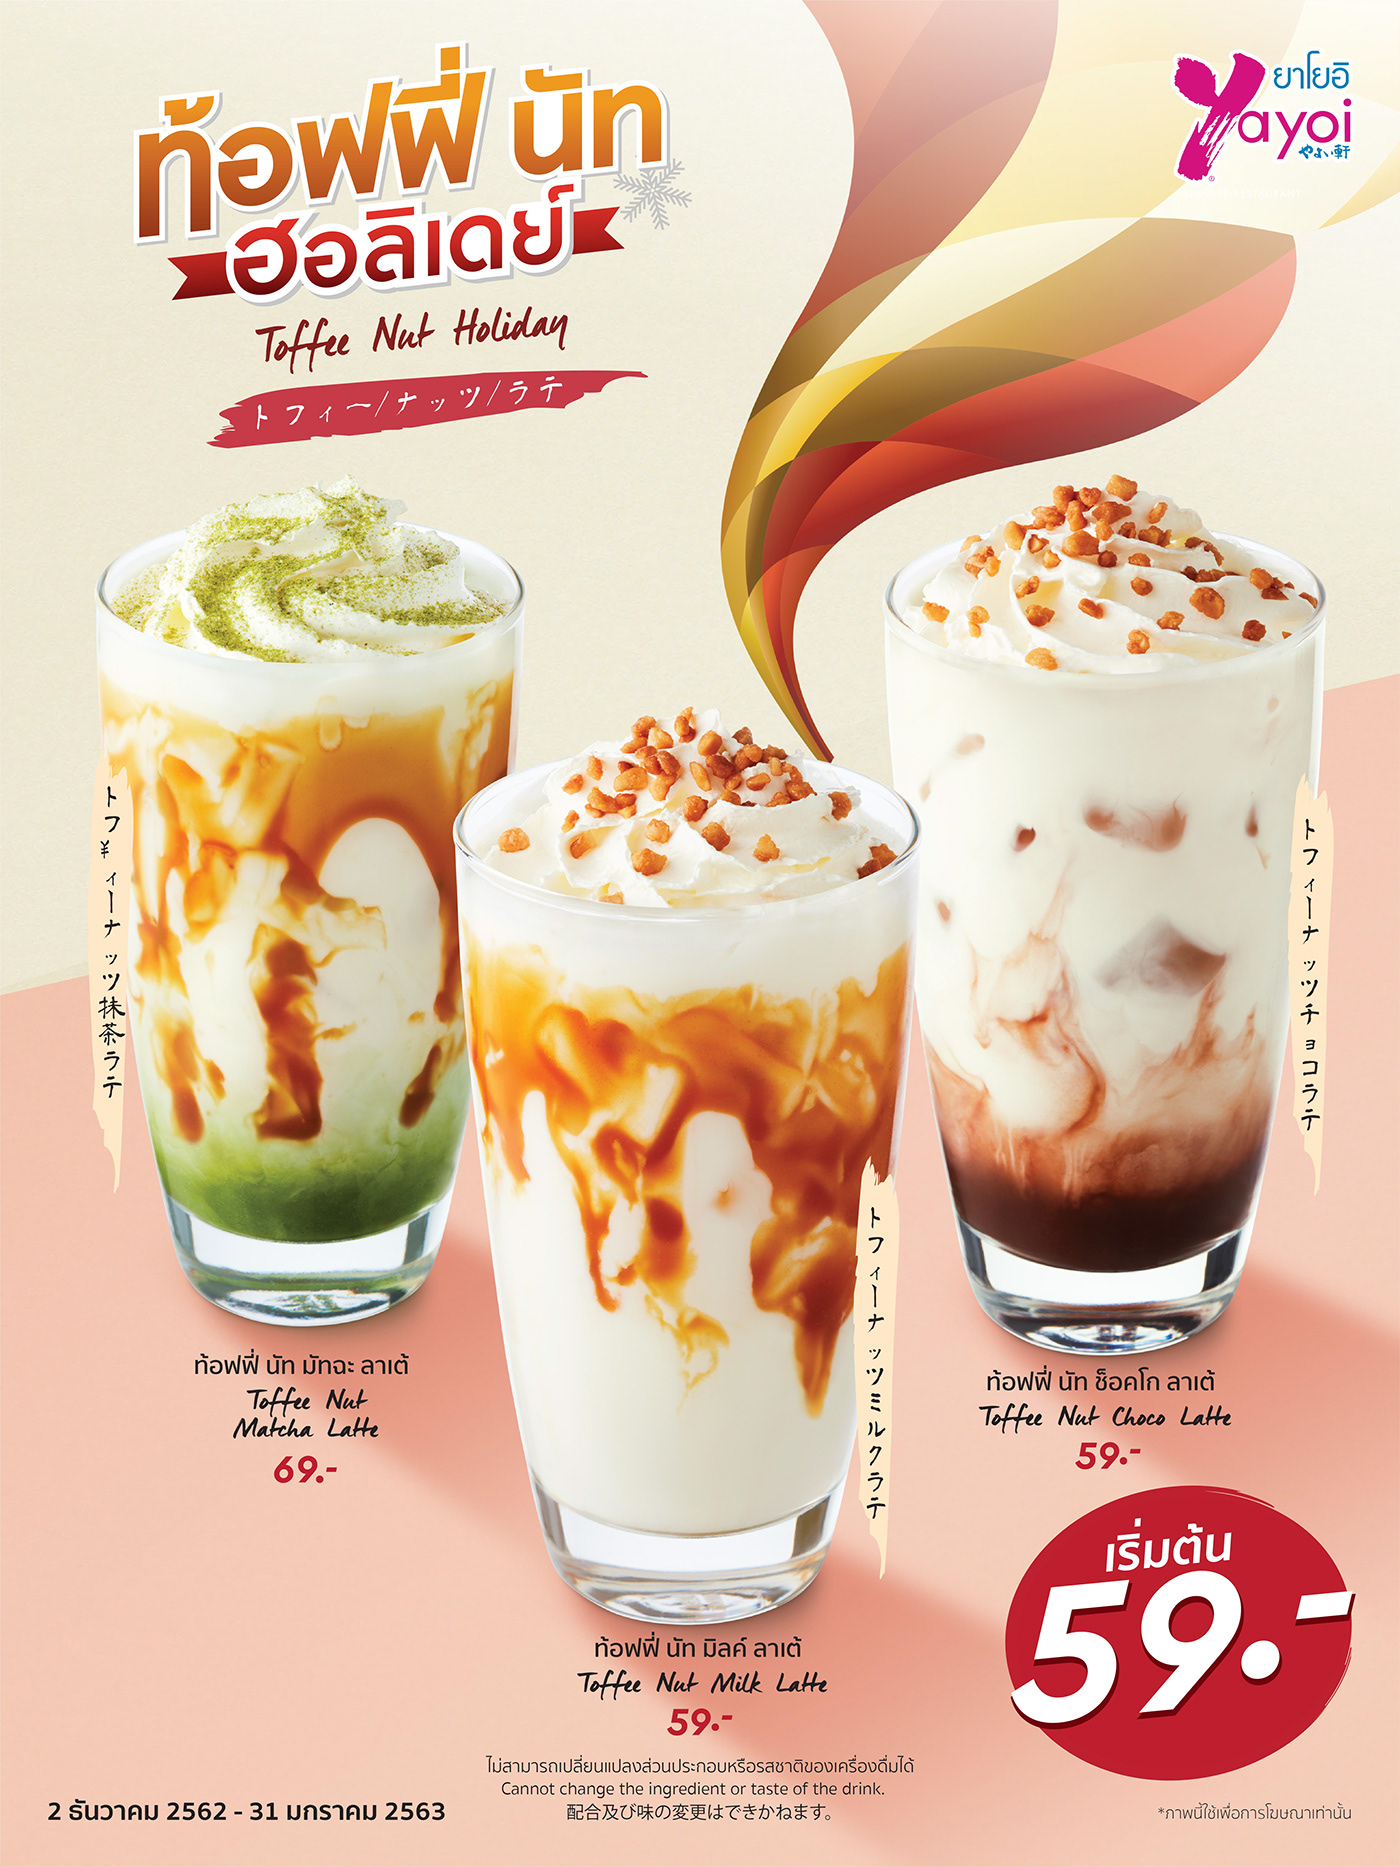 yayoi Thailand japanese toffeenut latte drinkmenu menudesign foodphomotion posterdesign westerdesigns